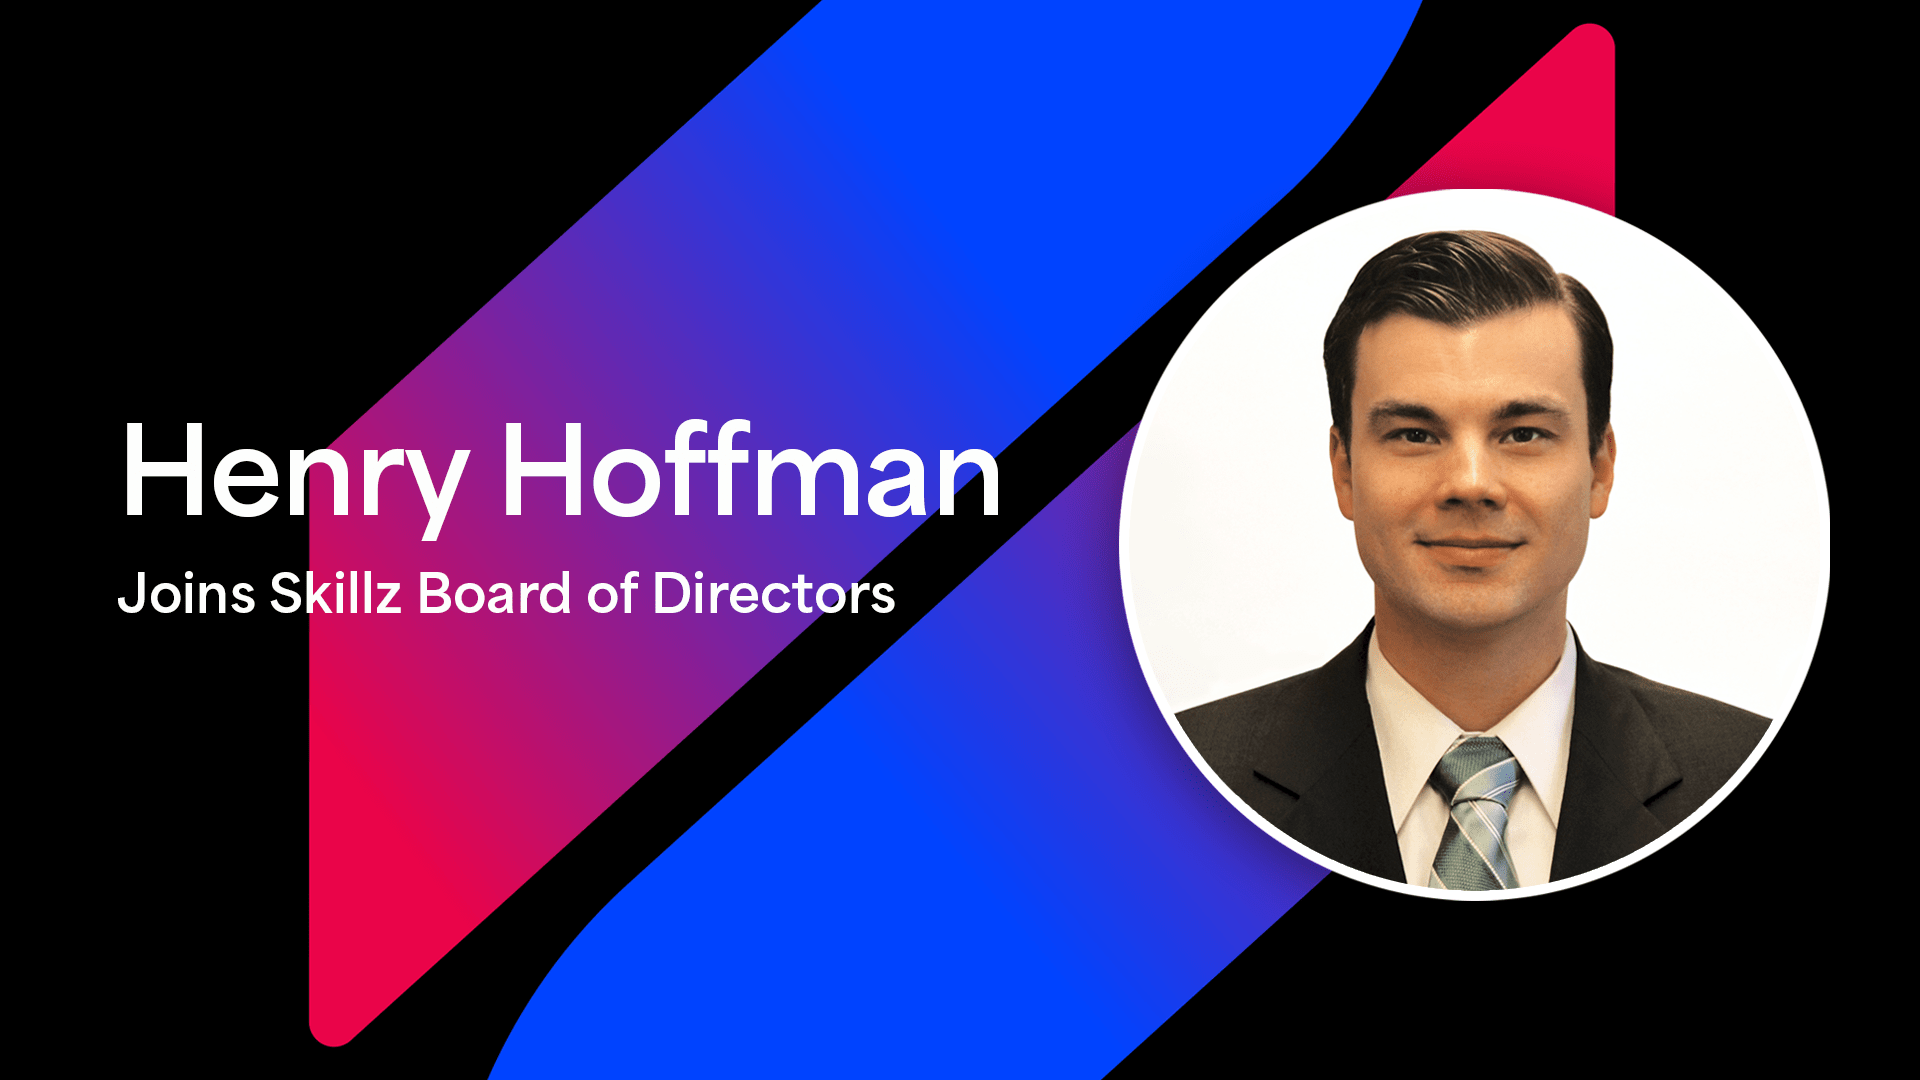 Henry Hoffman, Partner at SL Advisors, Joins Skillz Board of Directors